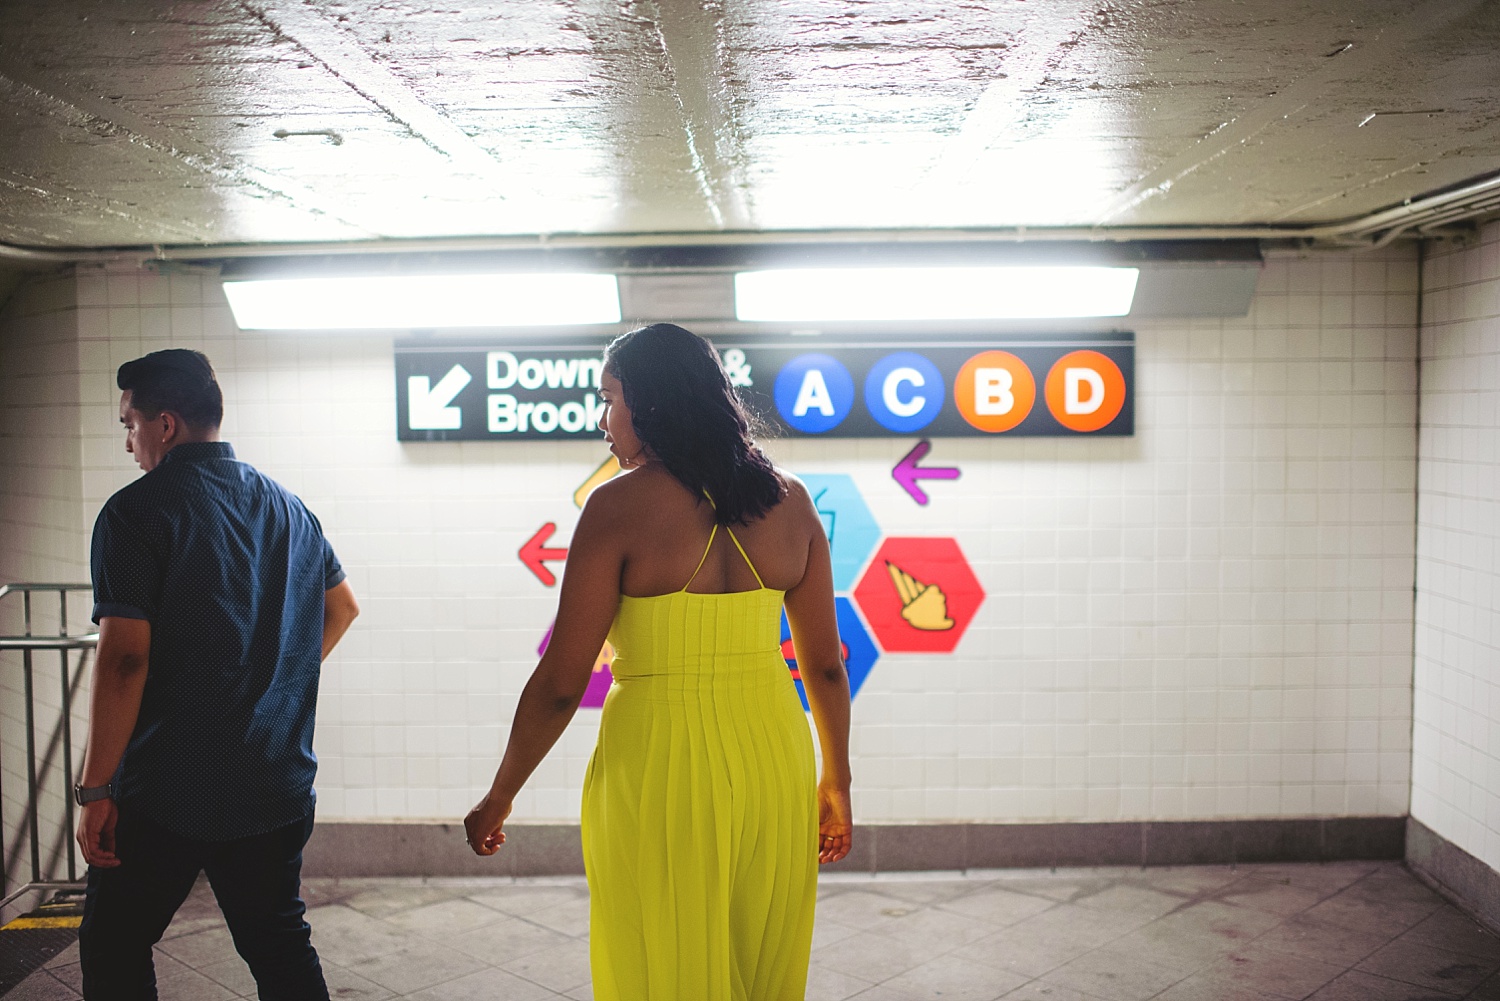 nyc subway engagement photos